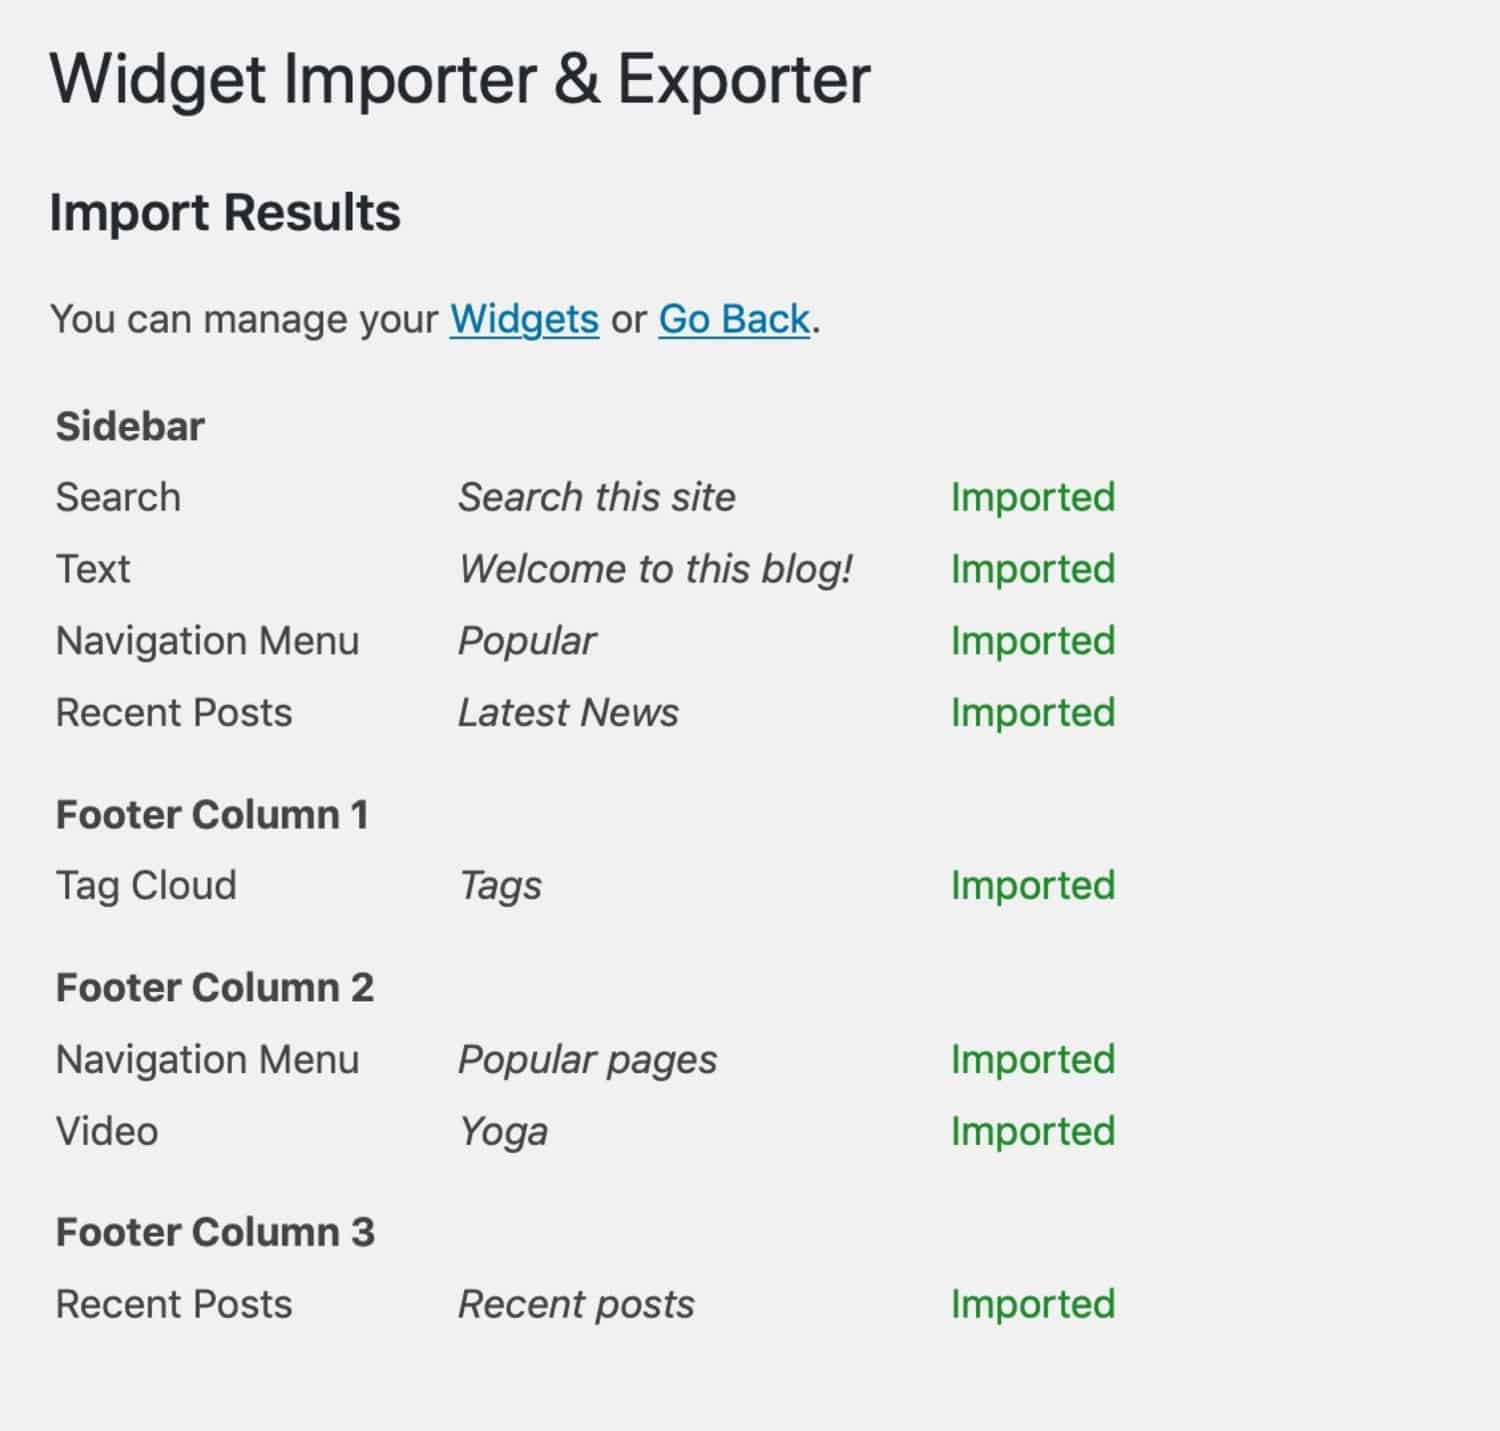 Widgets imported